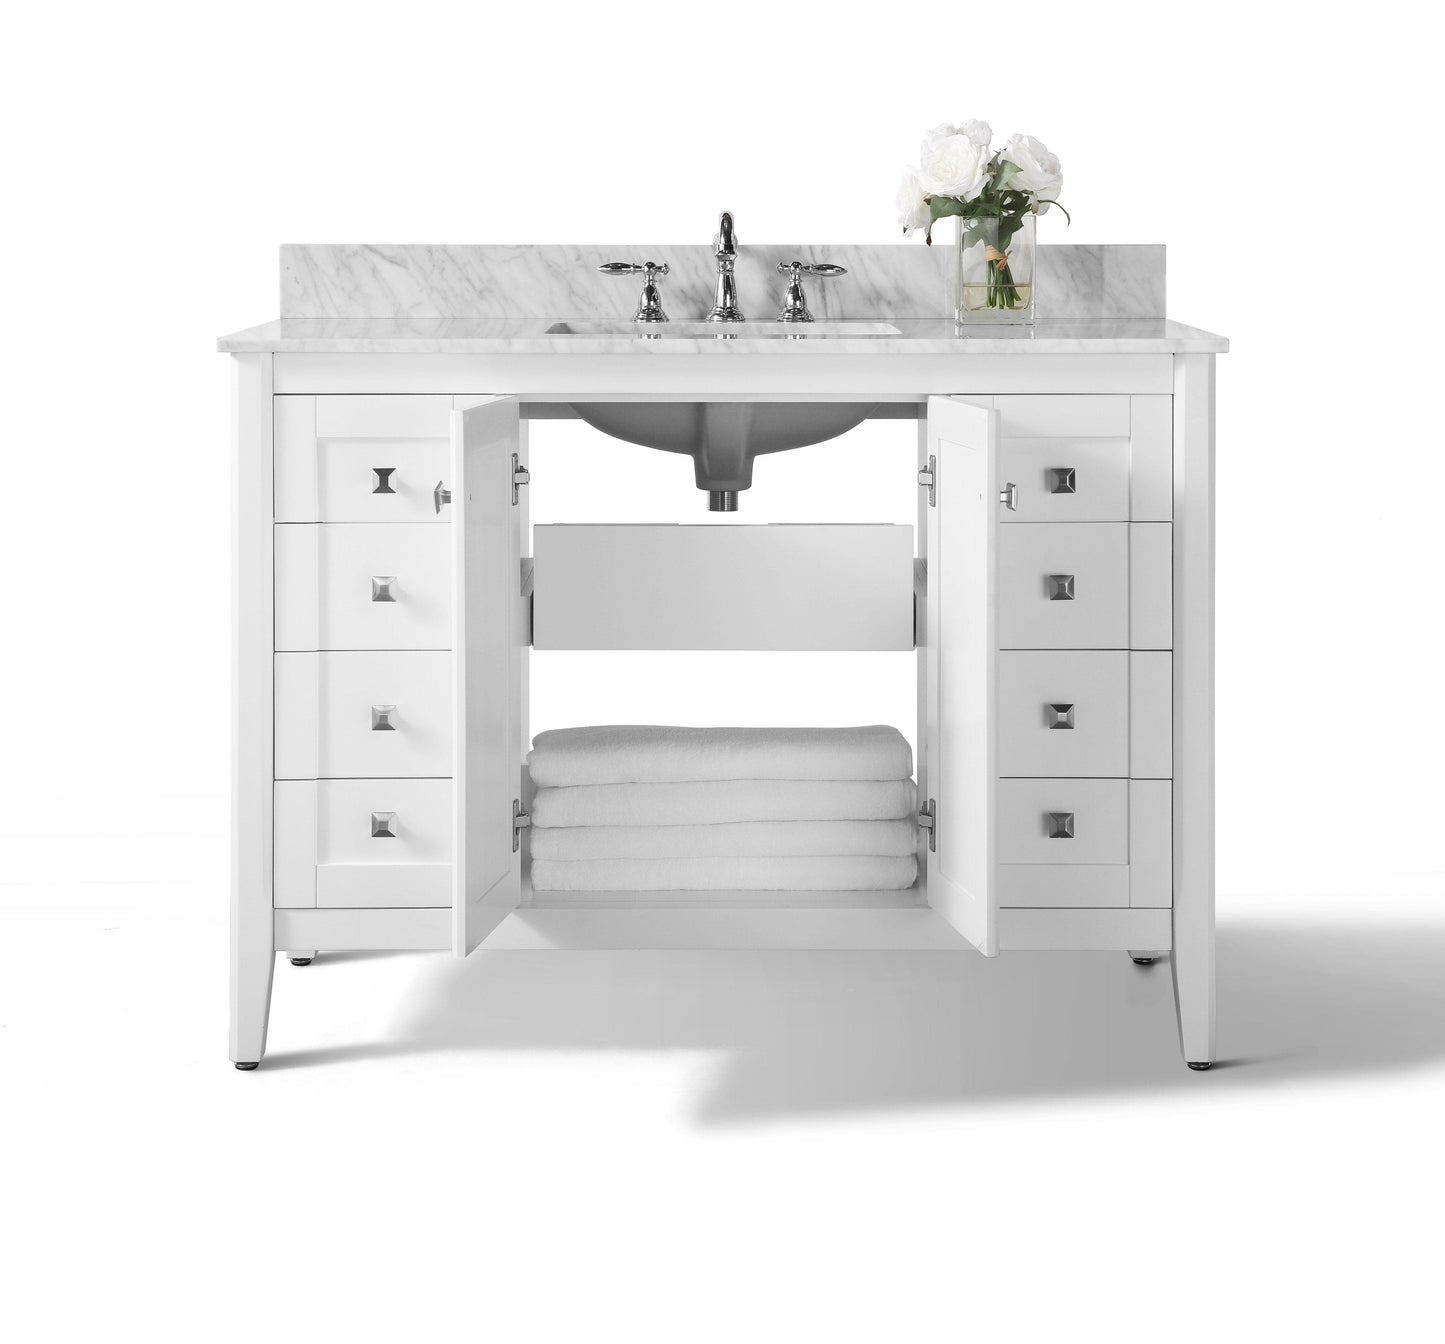 Ancerra Designs Shelton 48 in. Bath Vanity Set in White with 28 in. Mirror